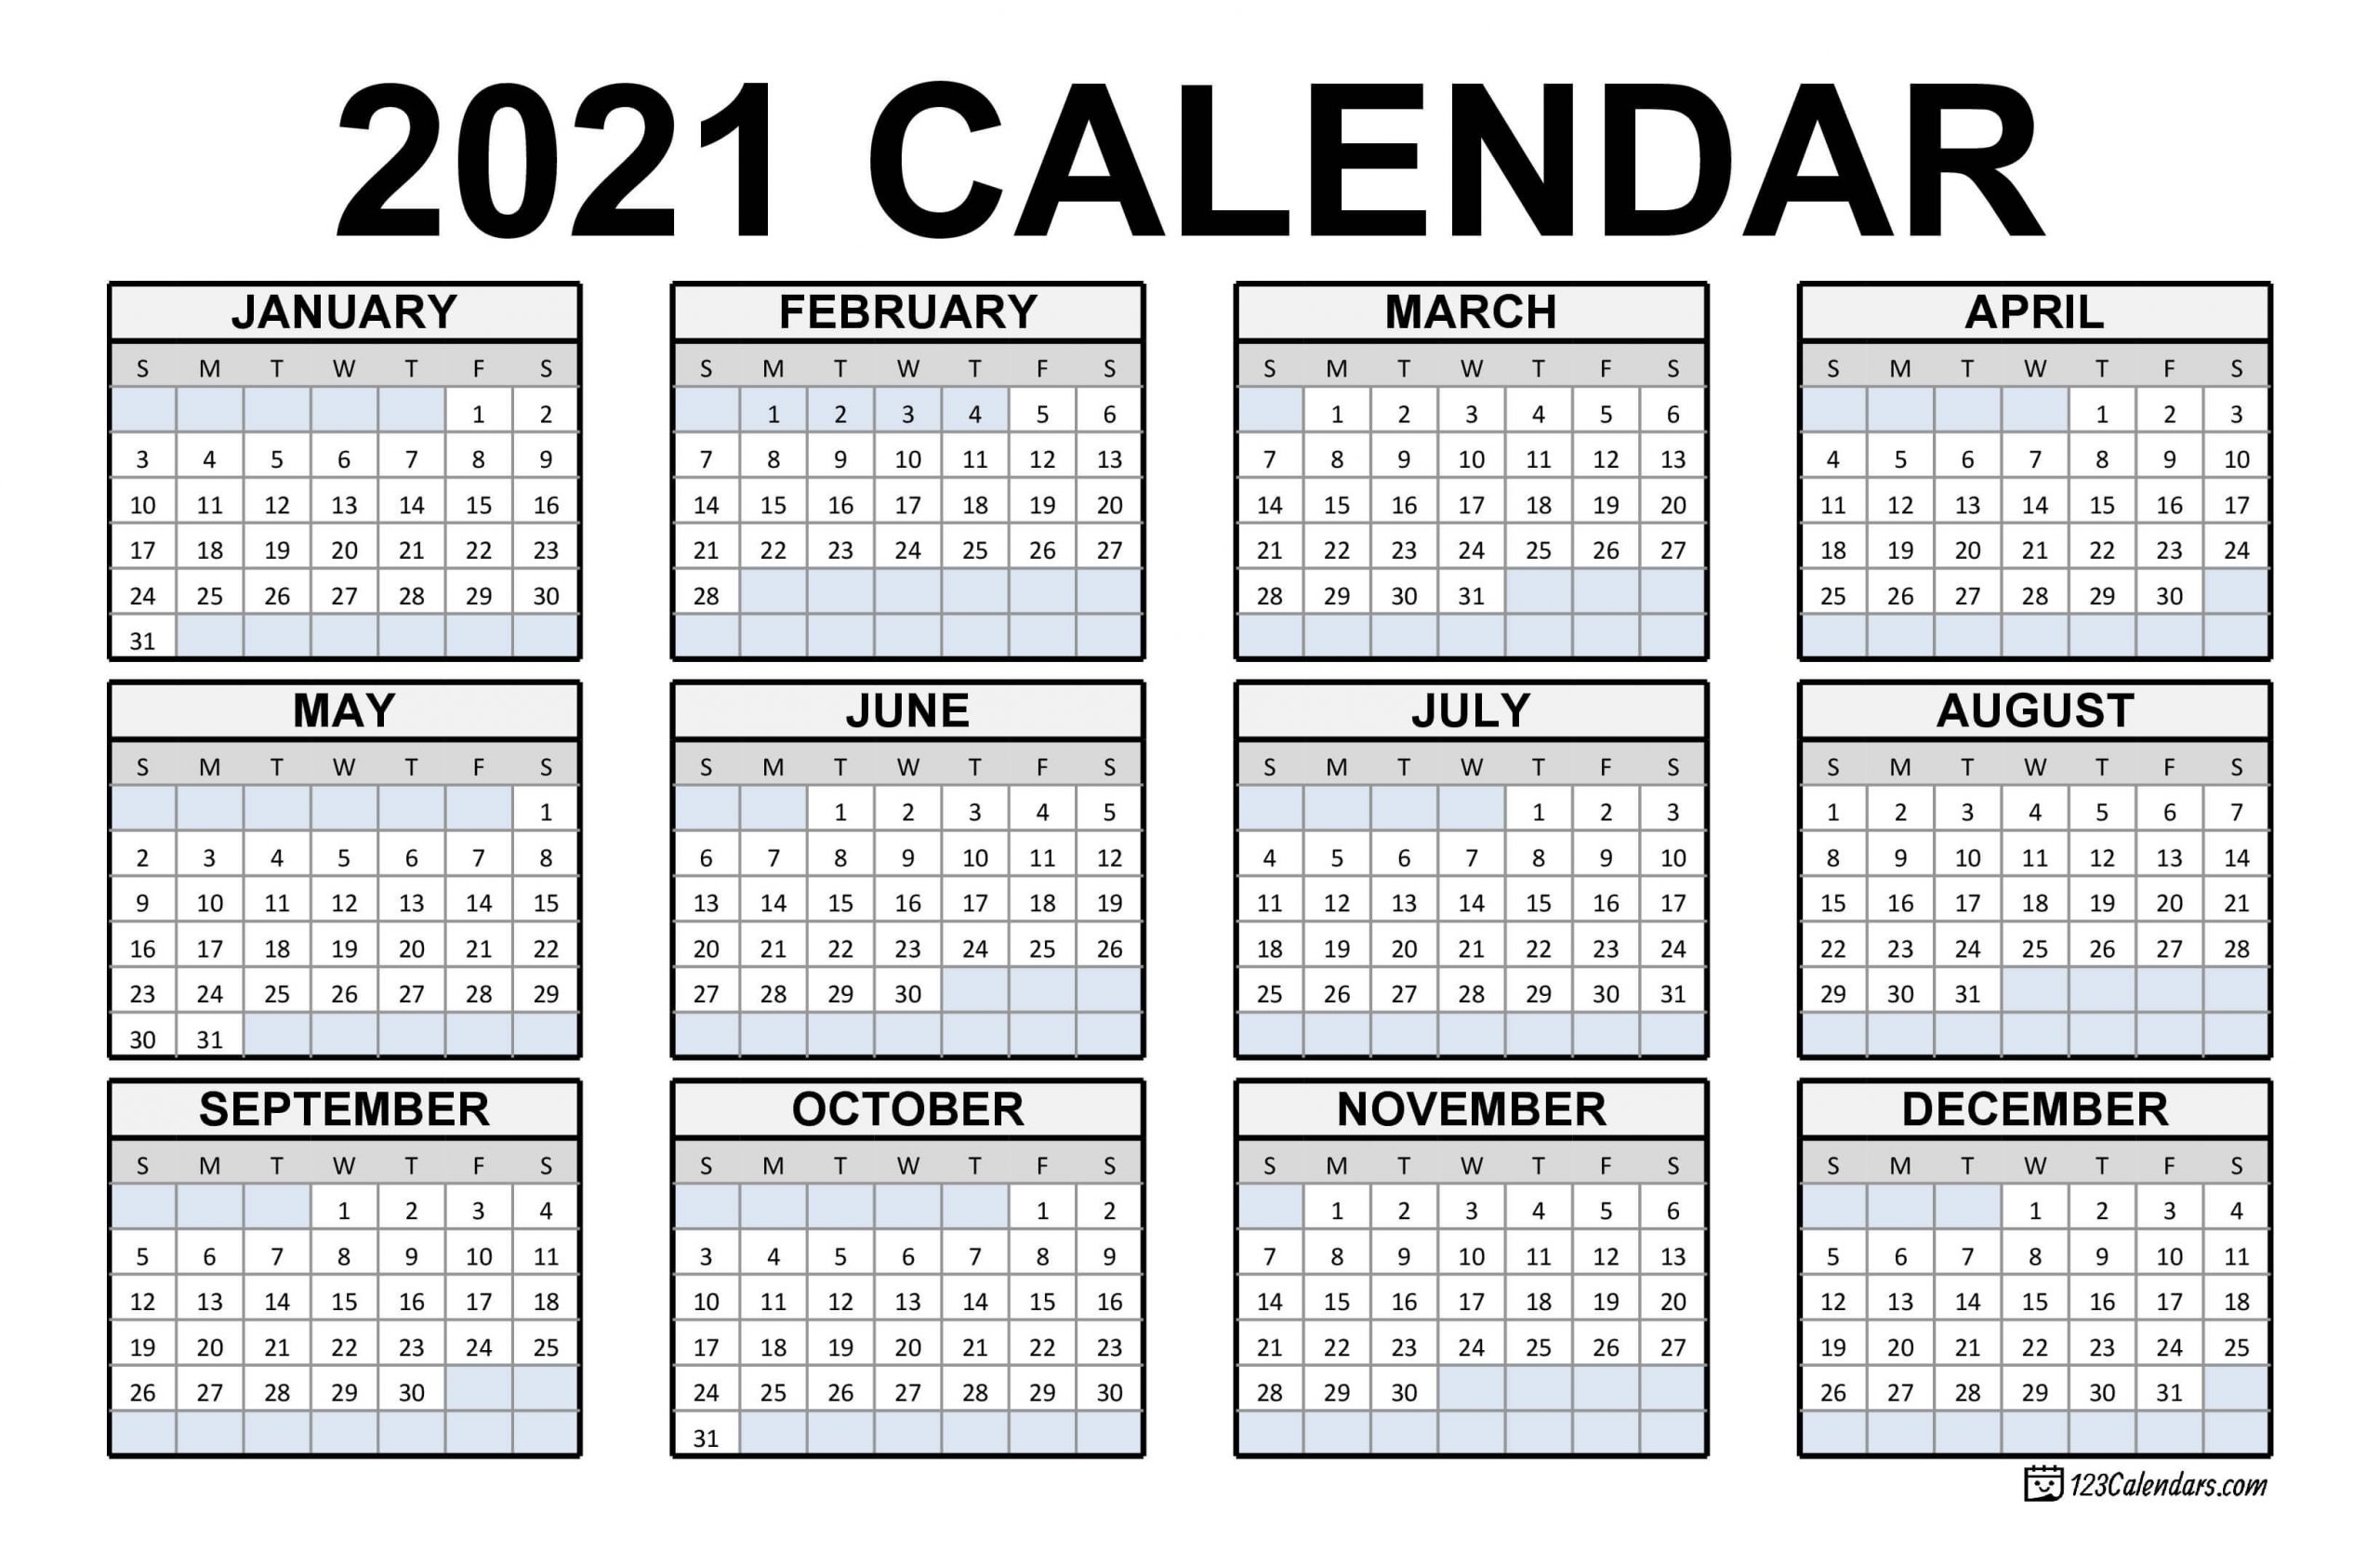 2021 Printable Calendar | 123Calendars-Calendar 2021 South Africa Free Printable